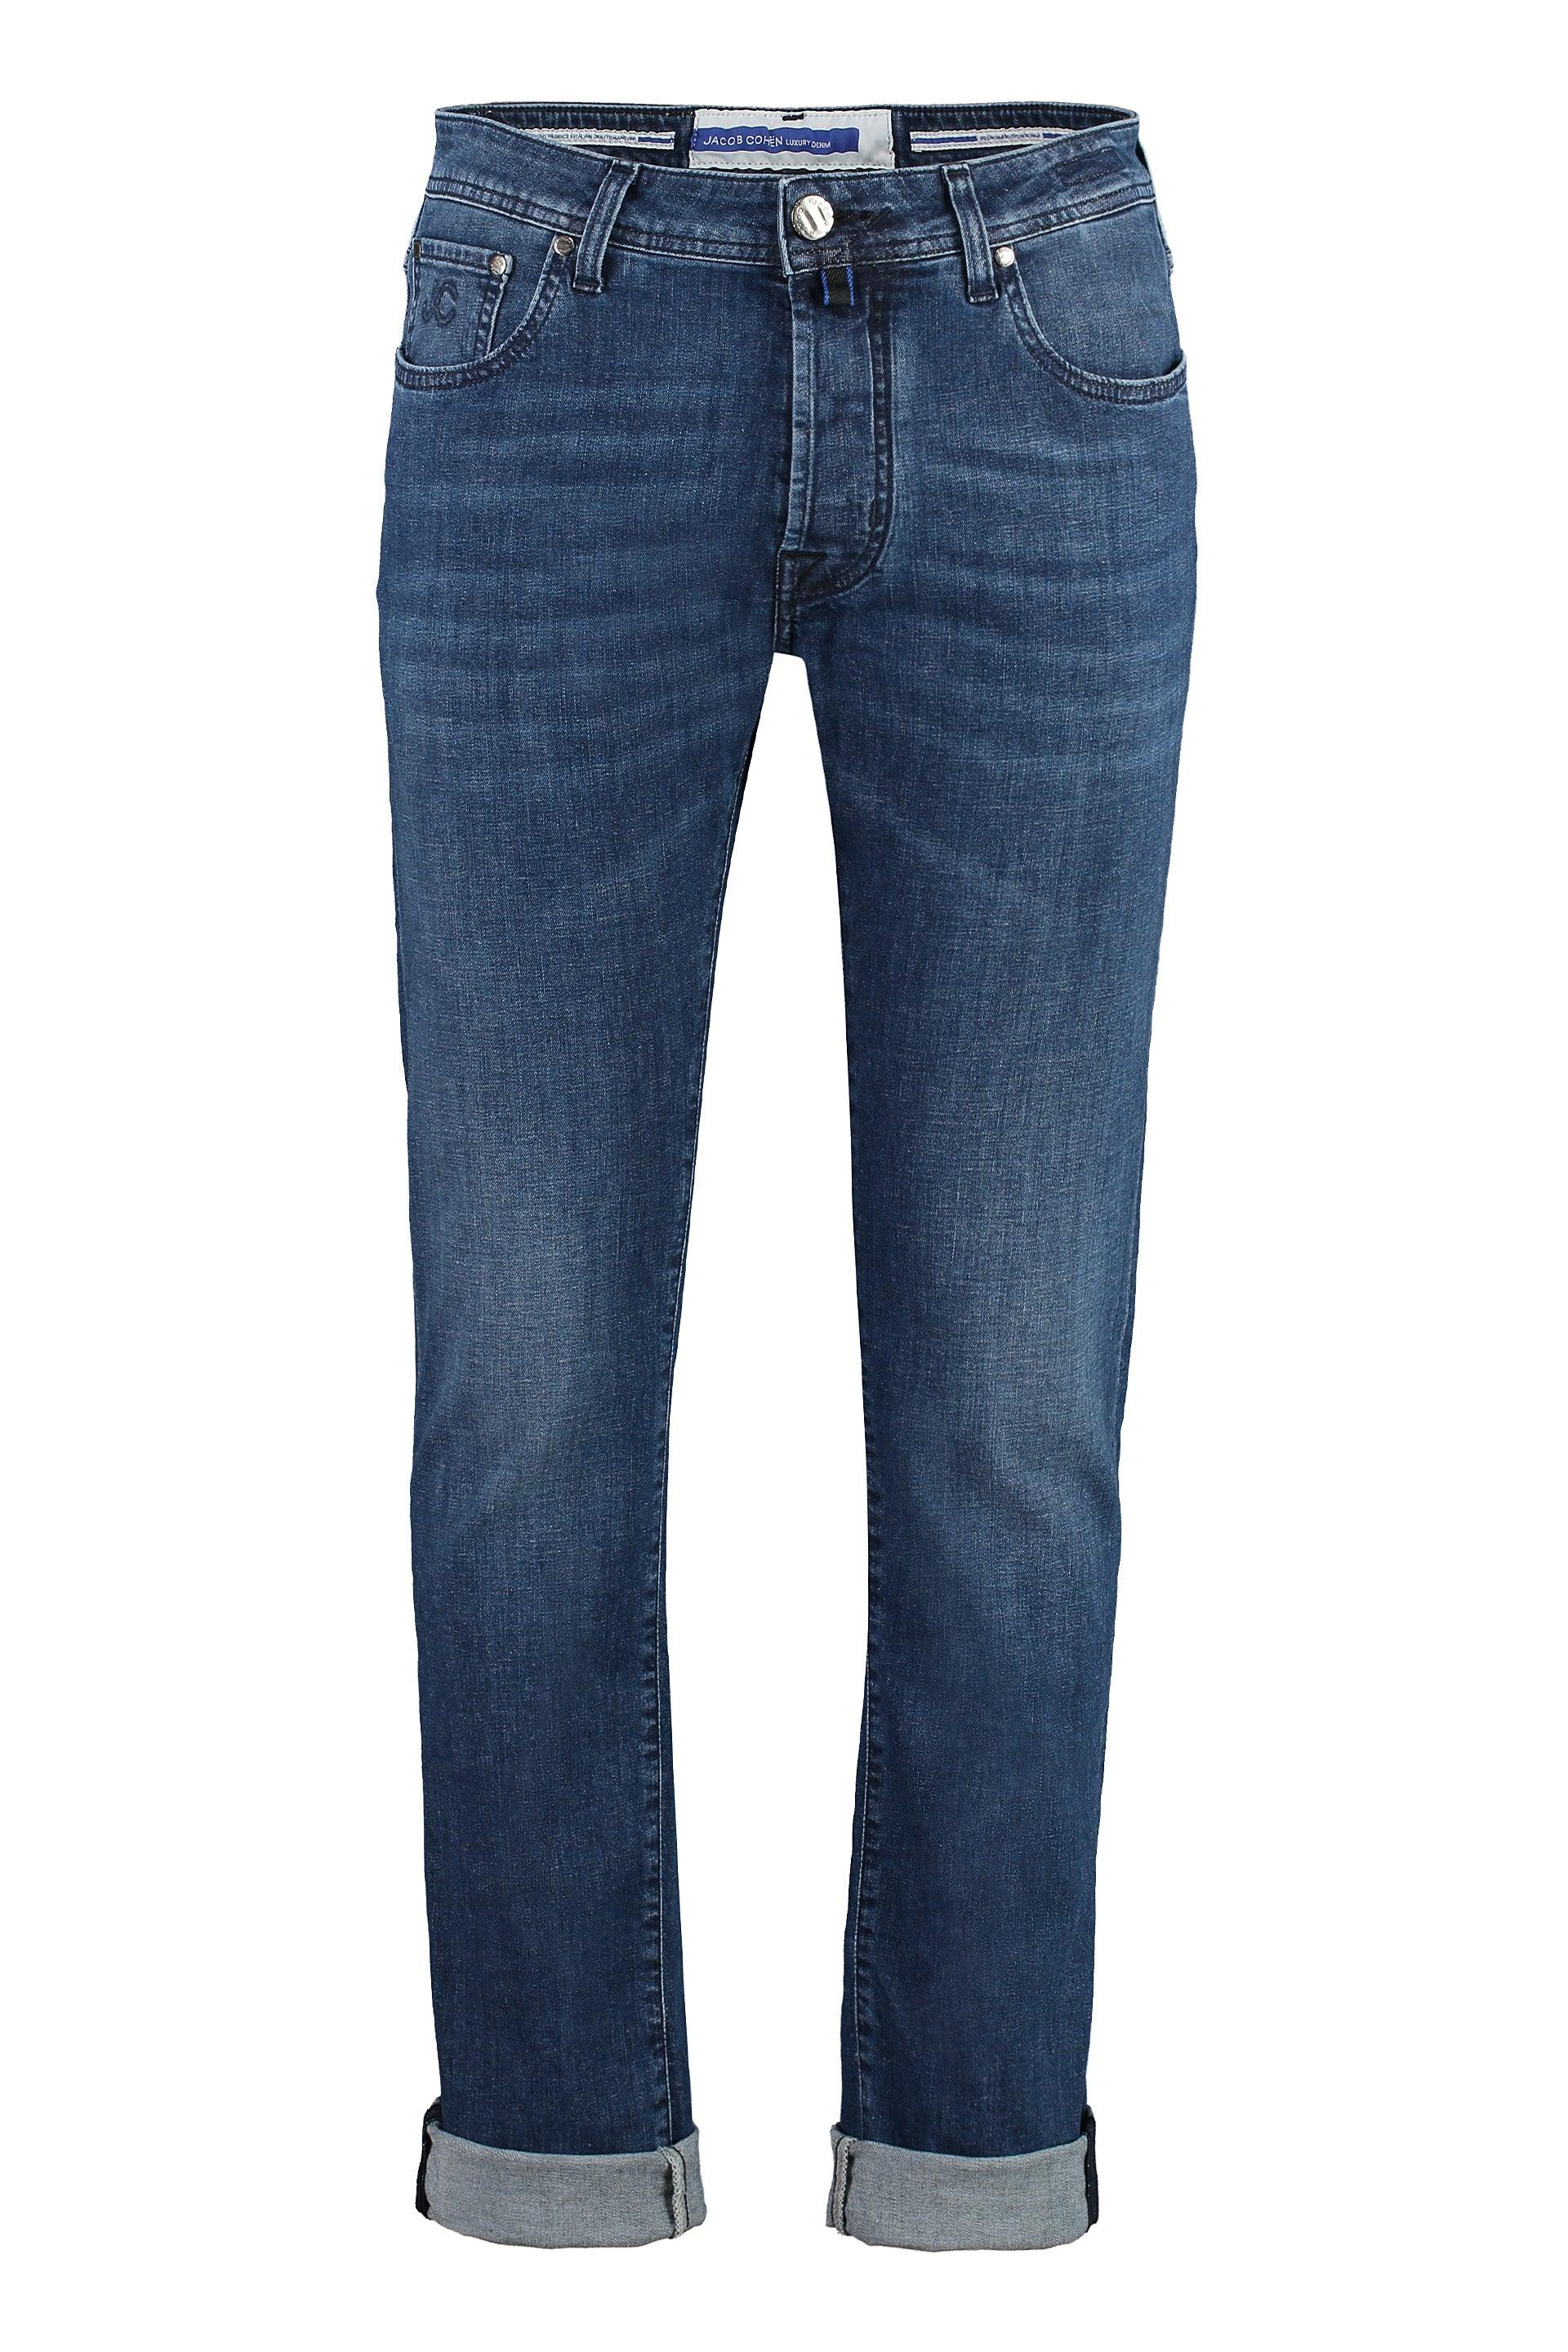 Jacob Cohen Bard Slim Fit Jeans in Blue for Men | Lyst